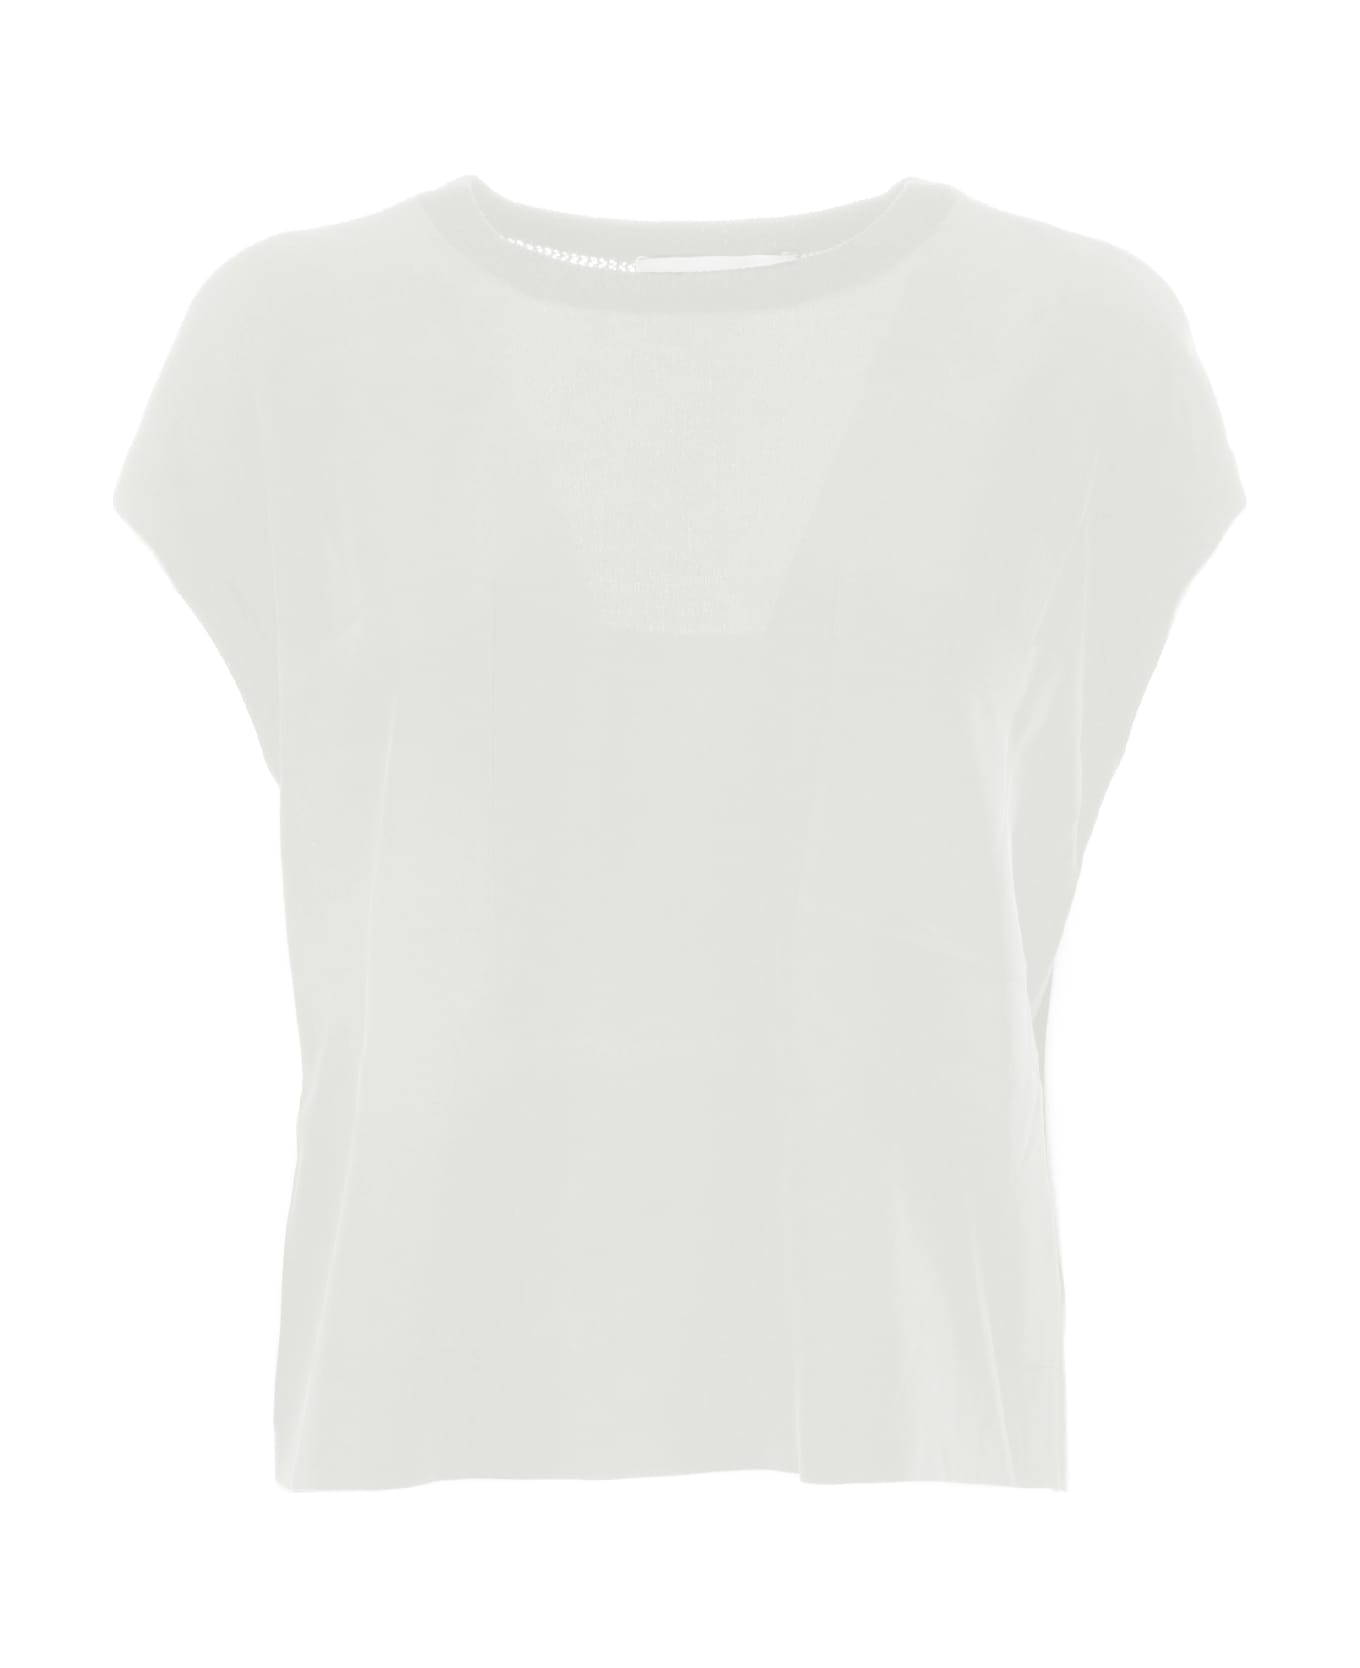 Kaos White T-shirt With Pockets - PANNA